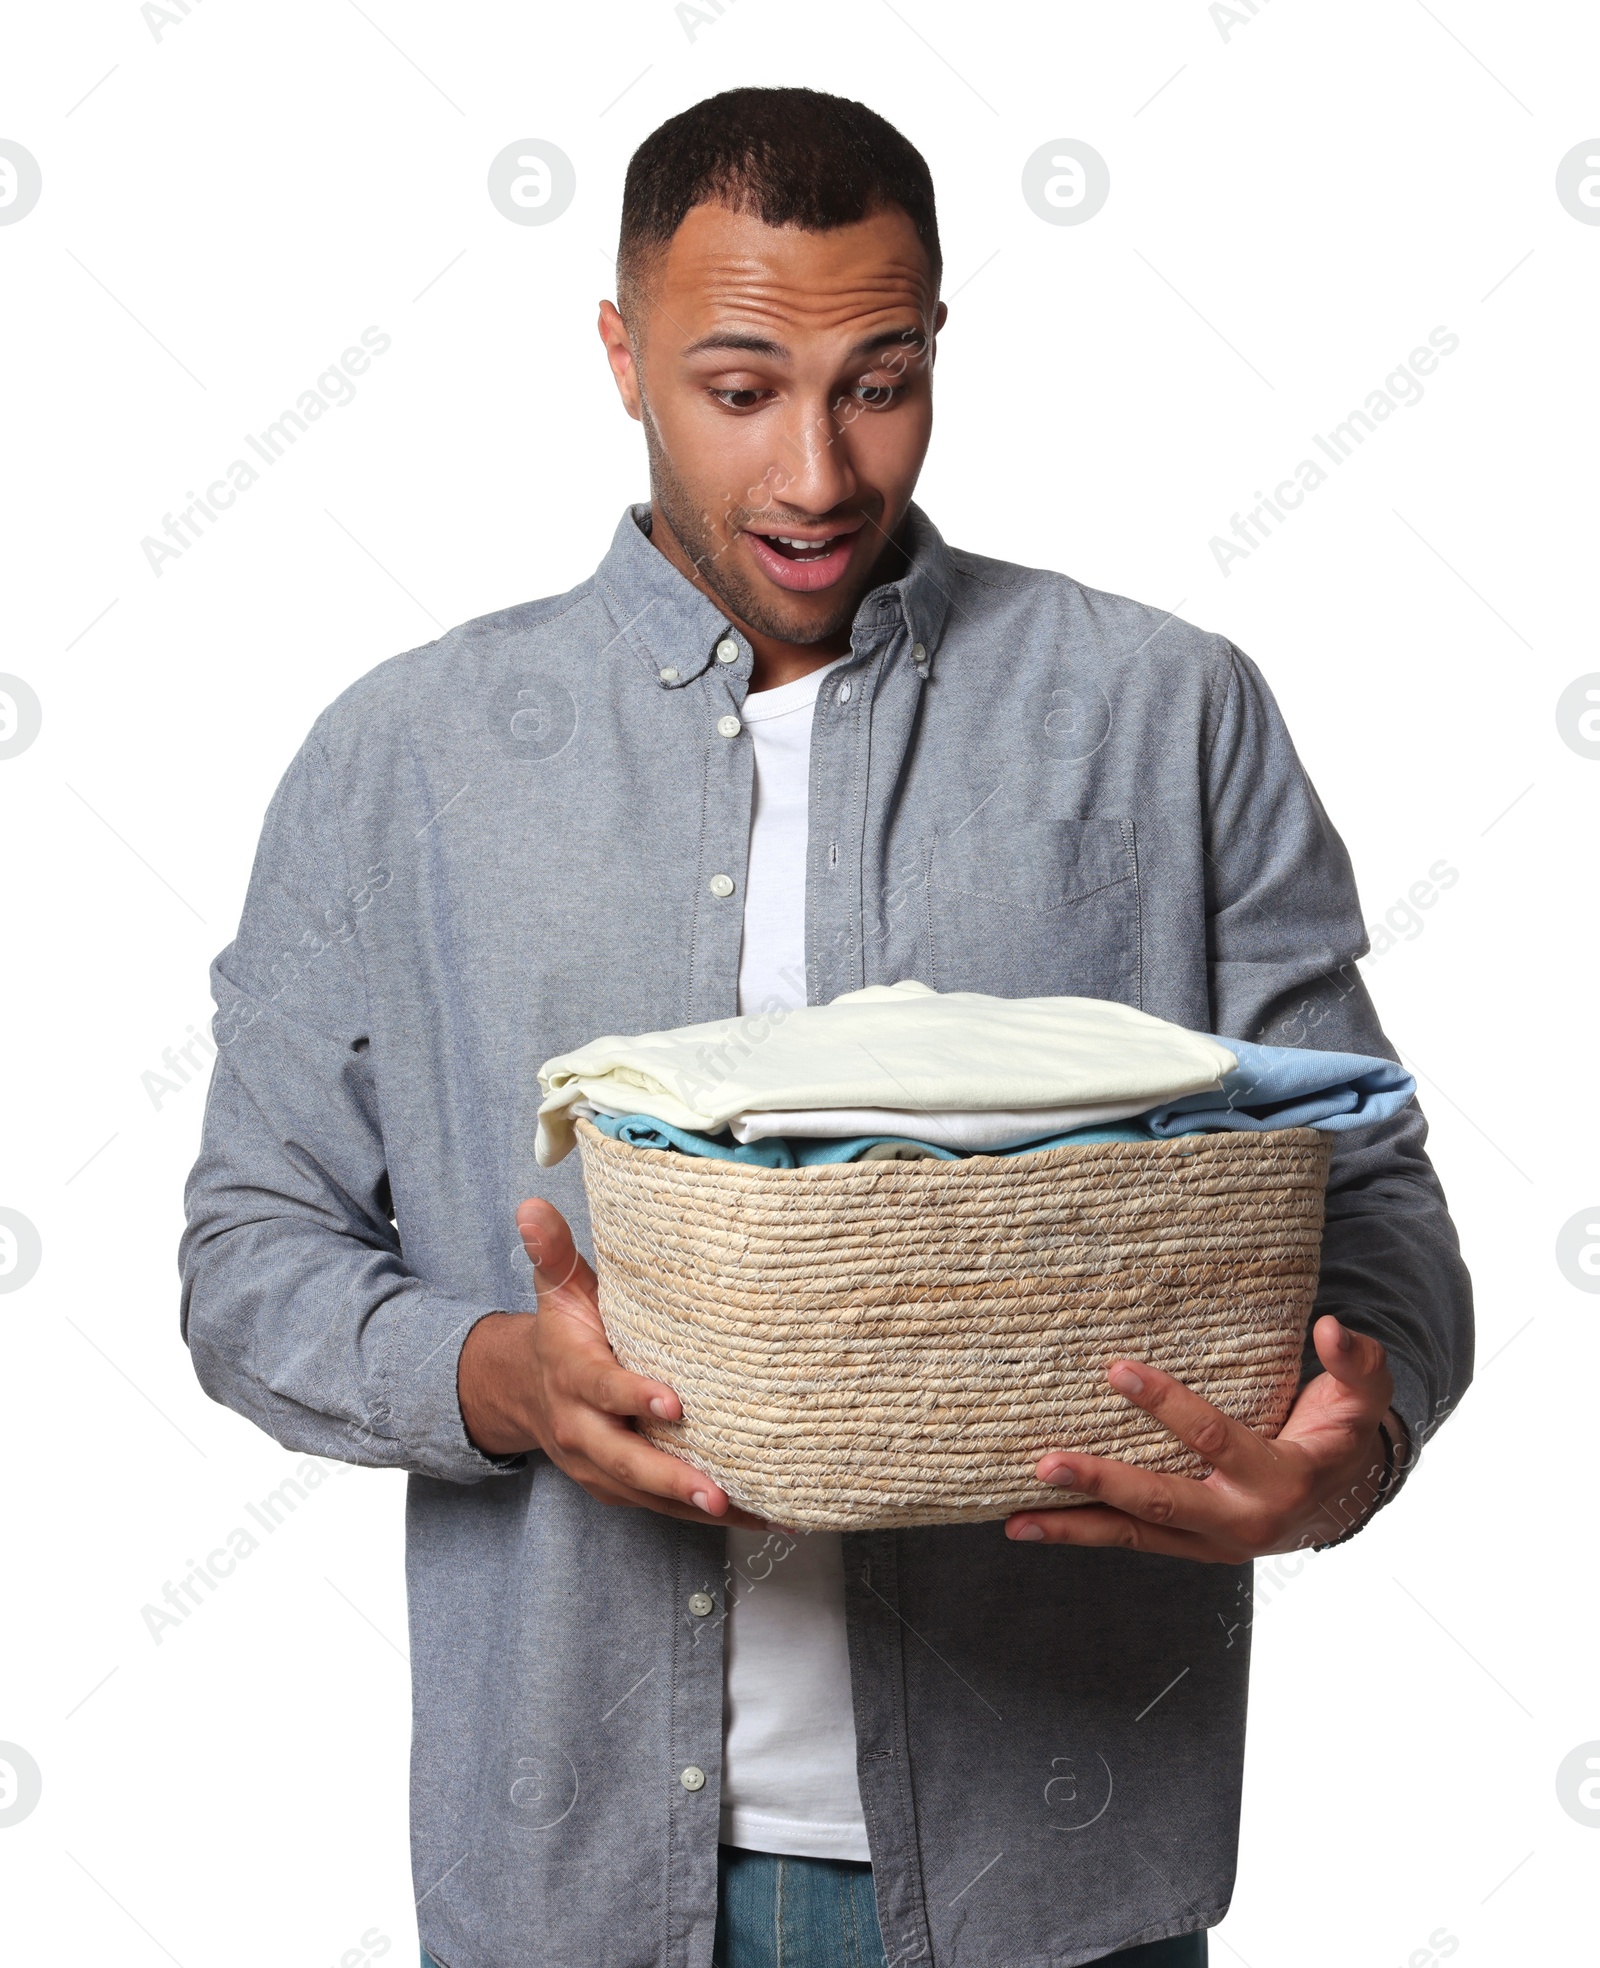 Photo of Emotional man with basket full of laundry on white background